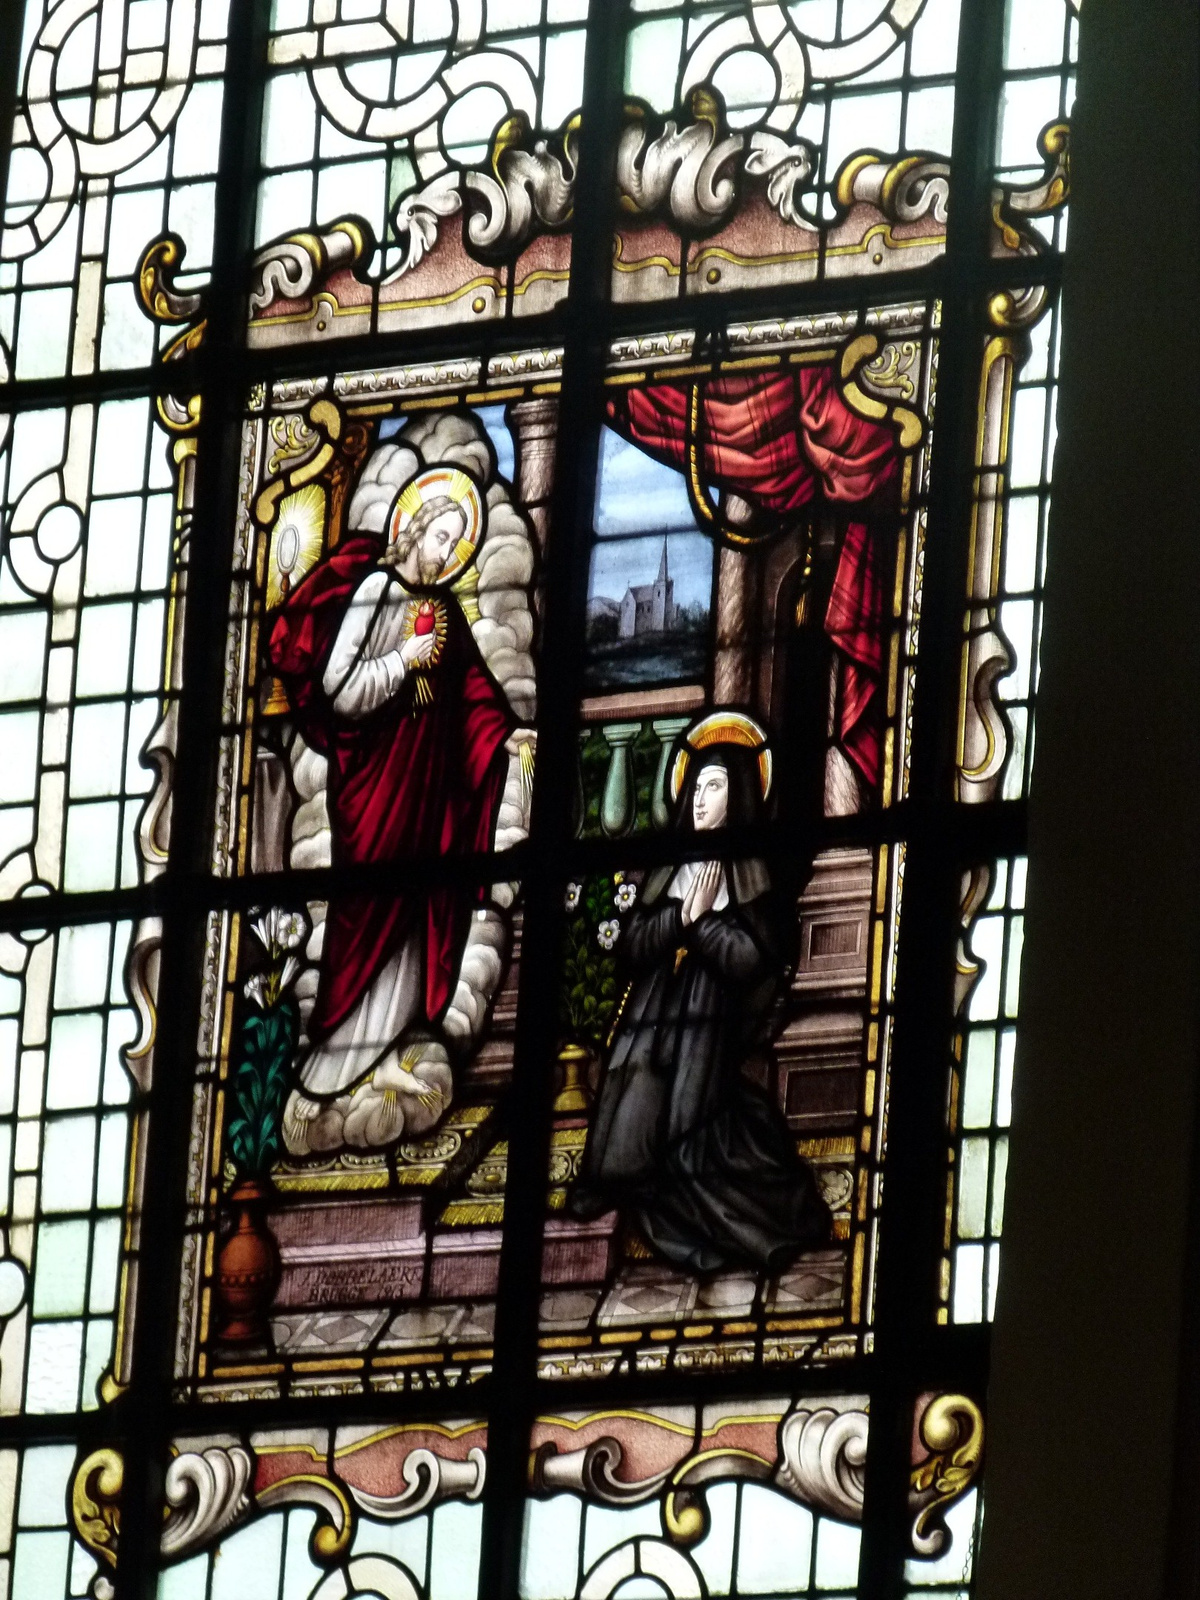 Brugge - kolostor templomának ablaka (P1280266)